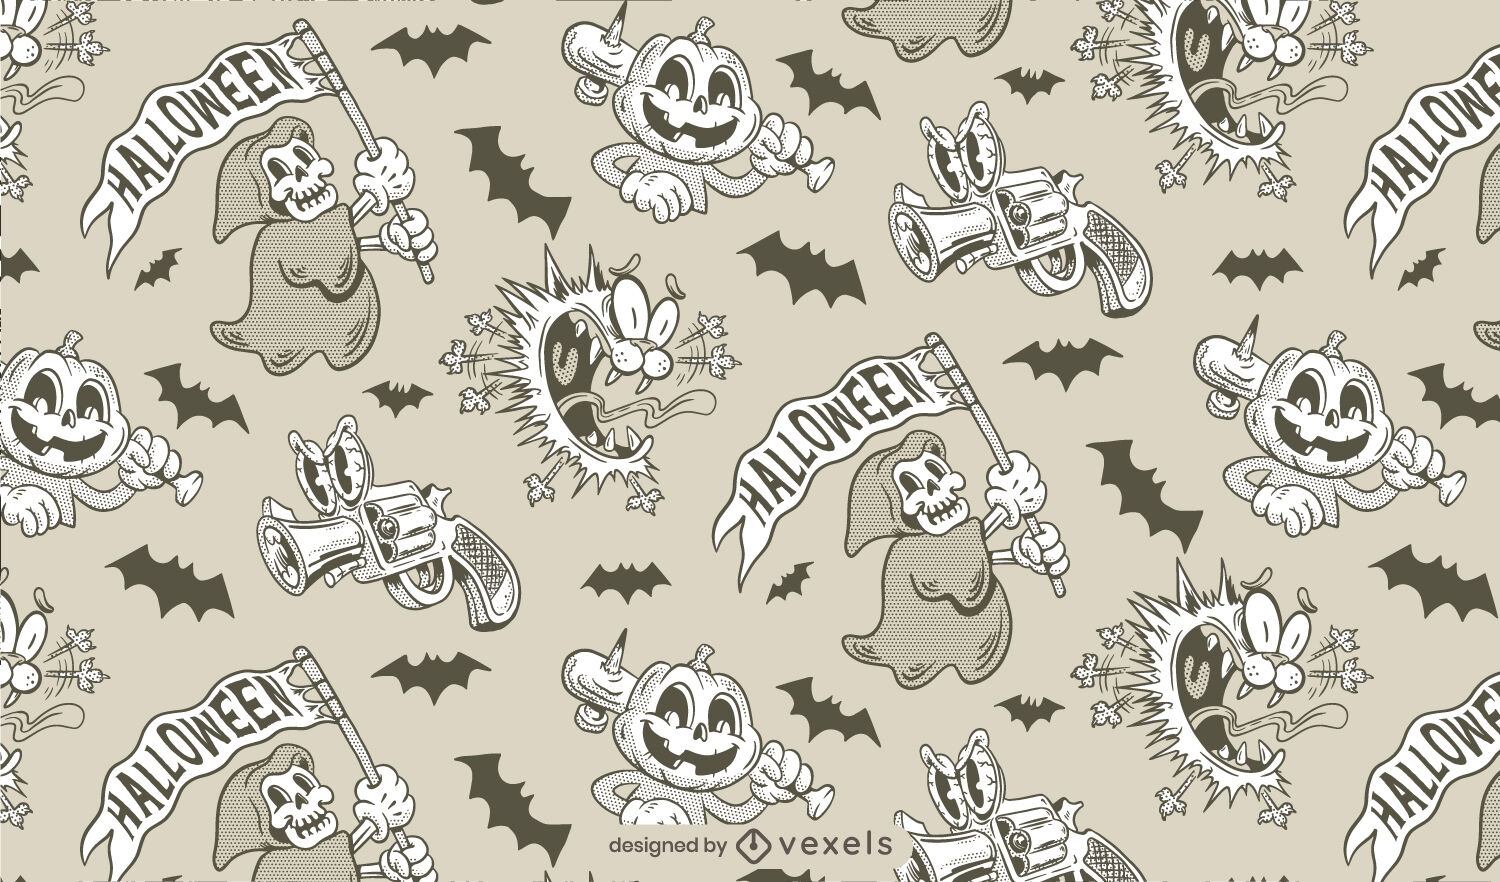 Diseño de patrón de monstruos de dibujos animados retro de halloween